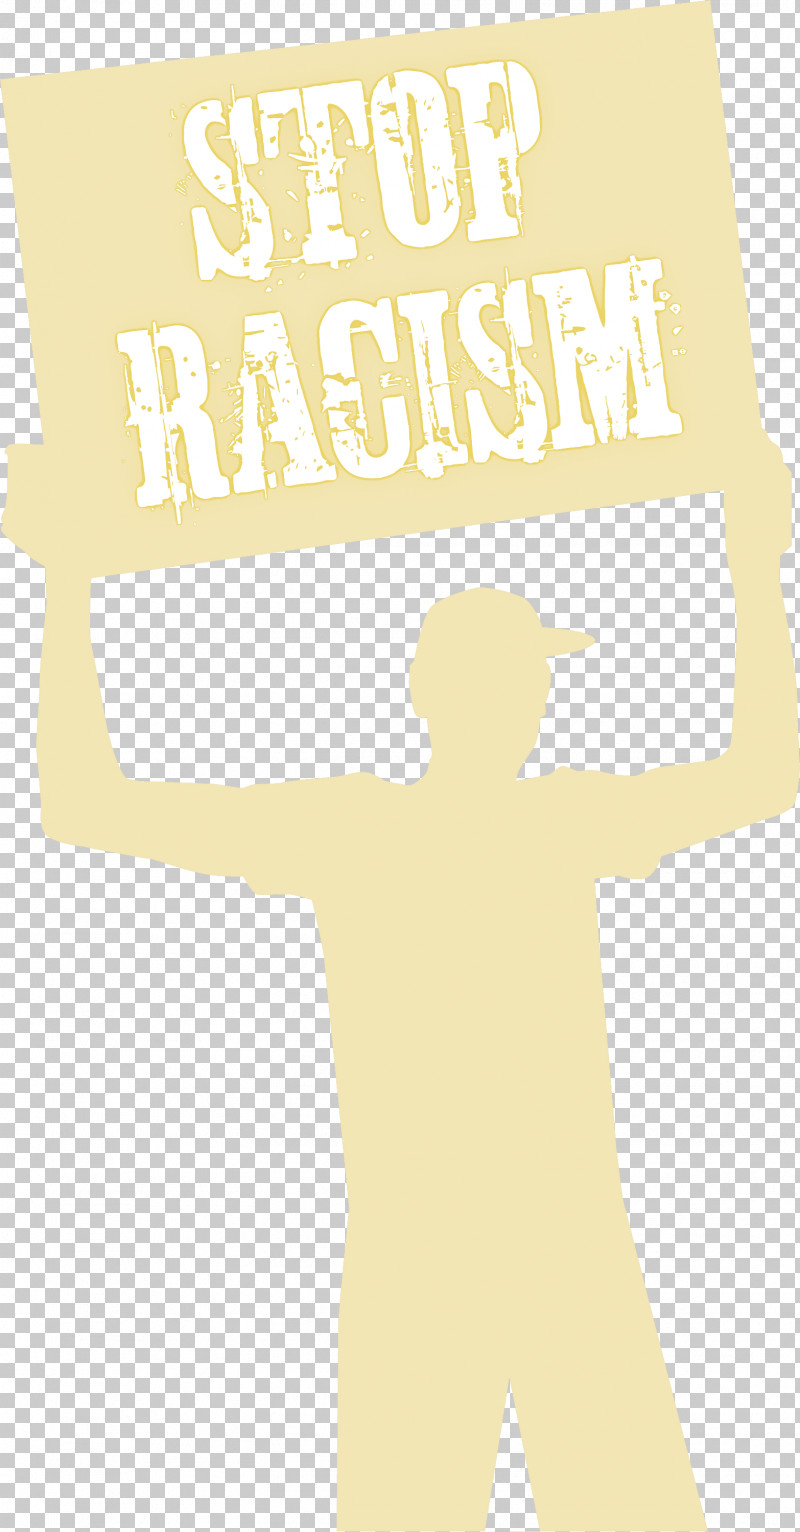 STOP RACISM PNG, Clipart, Behavior, Hm, Human, Line, Logo Free PNG Download